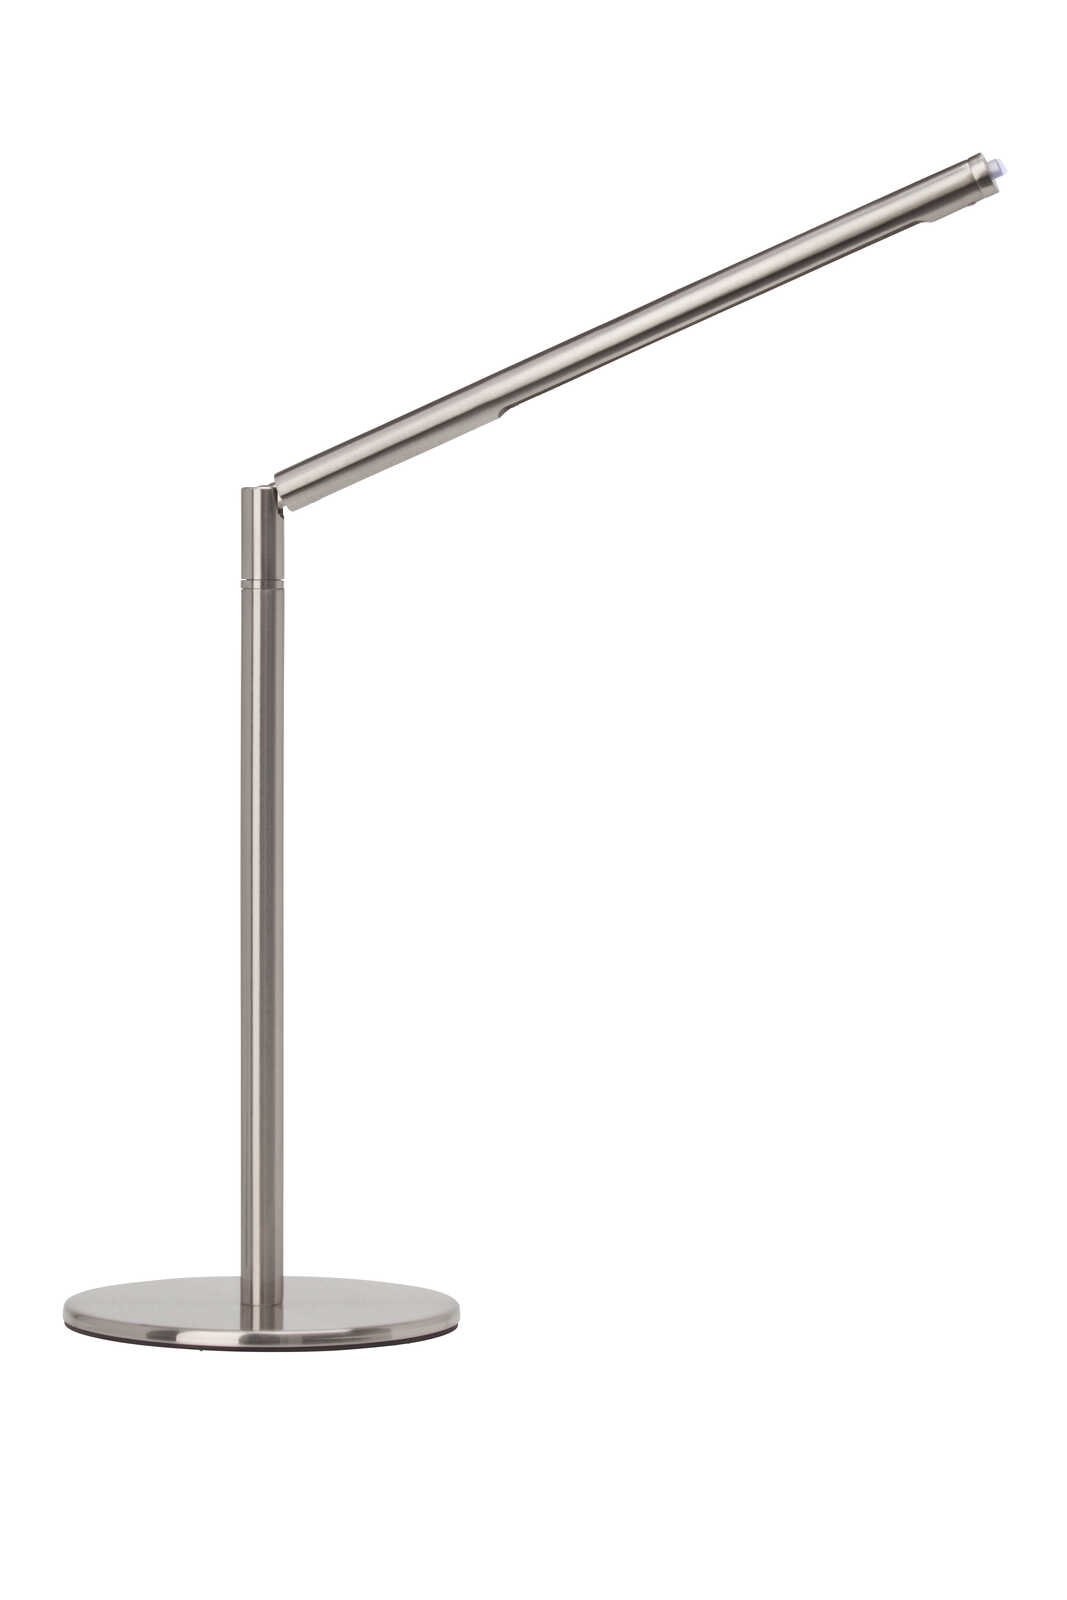             Metal table lamp - Carlotta - Metallic
        